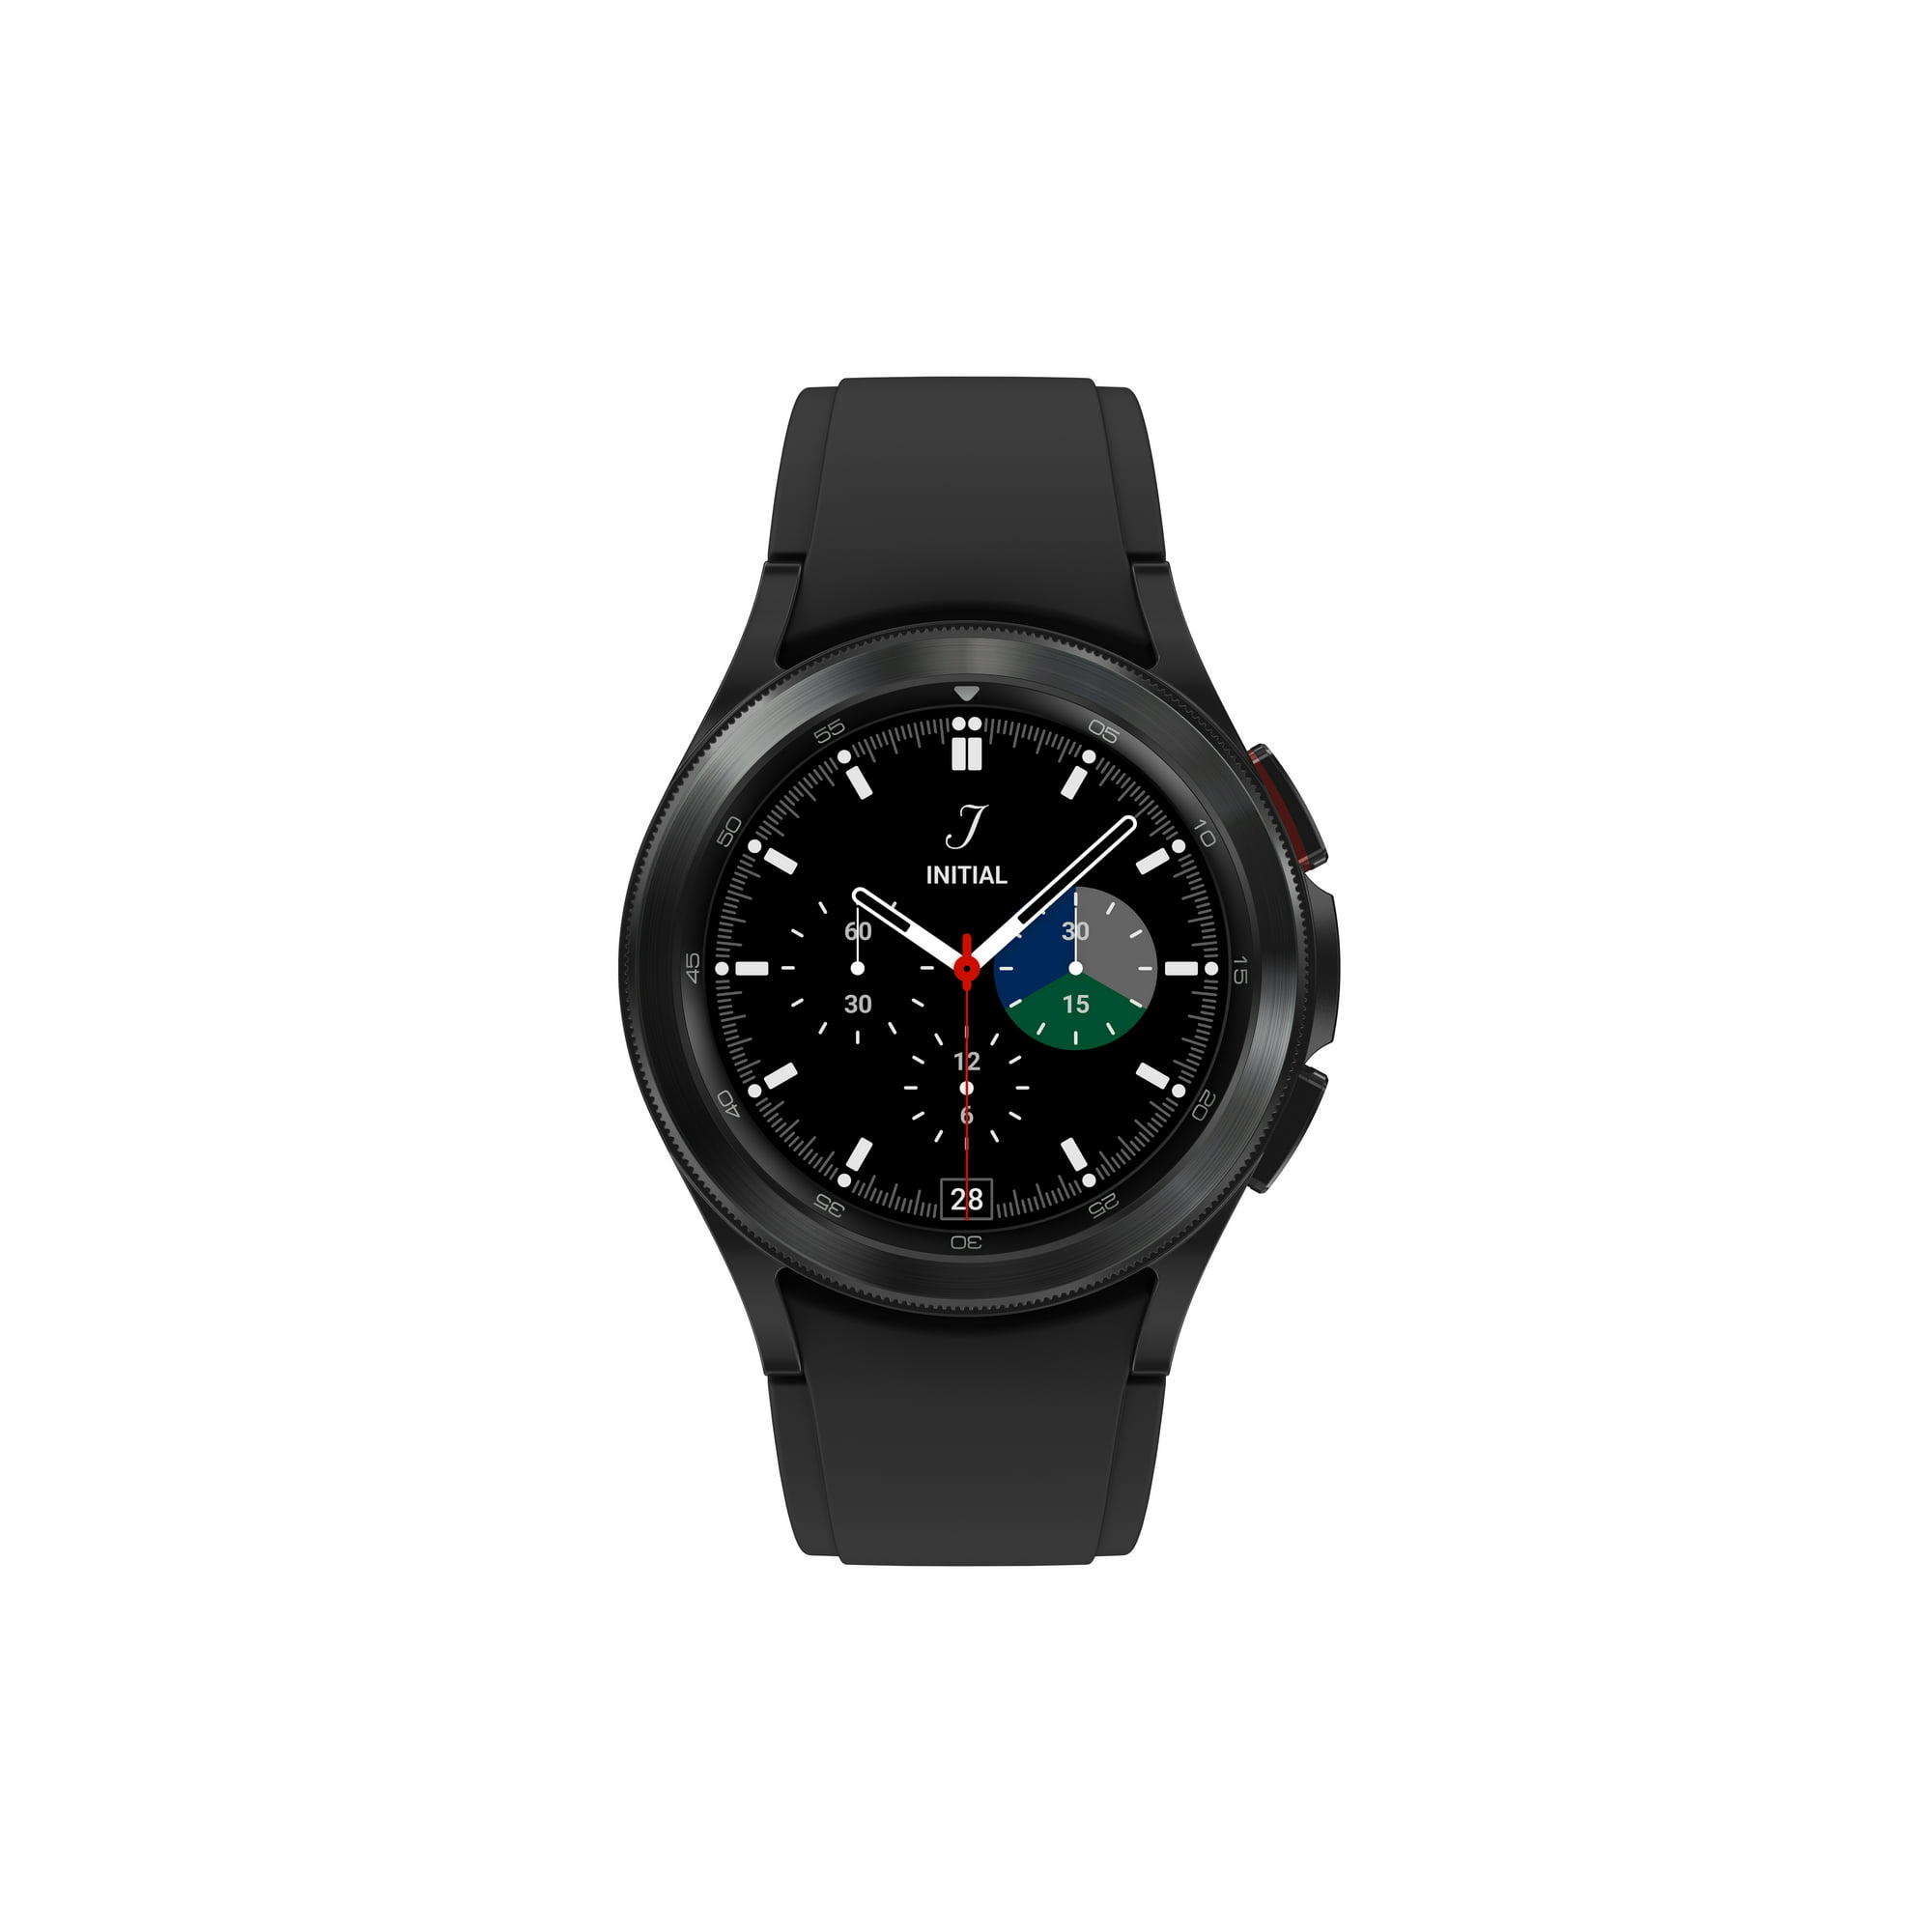 42mm Samsung Galaxy Watch 4 Classic Bluetooth Smartwatch (Black or Silver) $129 + Free Shipping